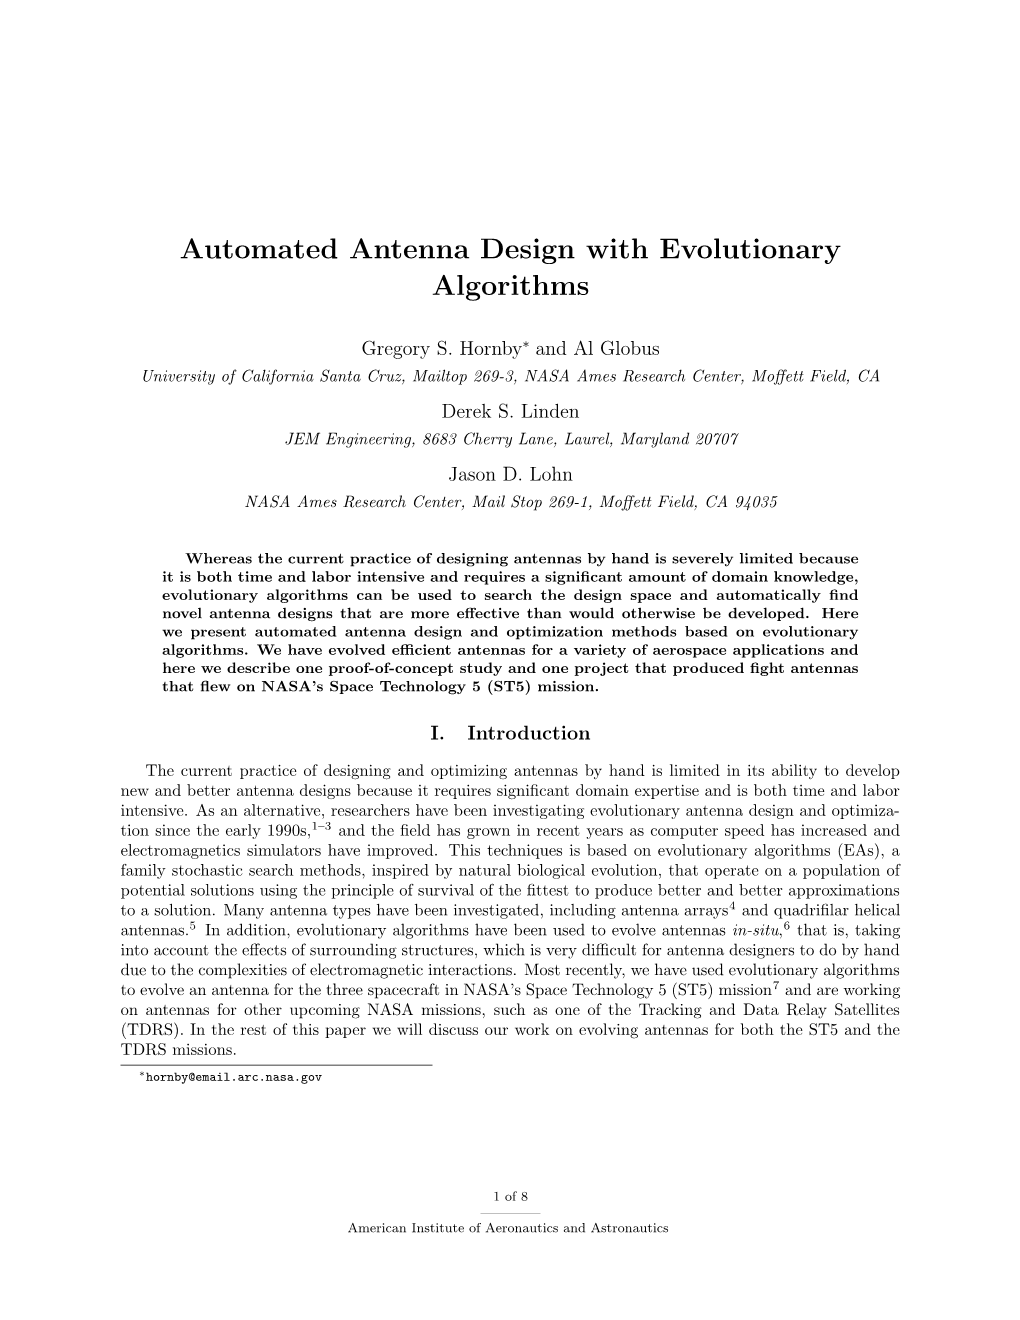 Automated Antenna Design with Evolutionary Algorithms